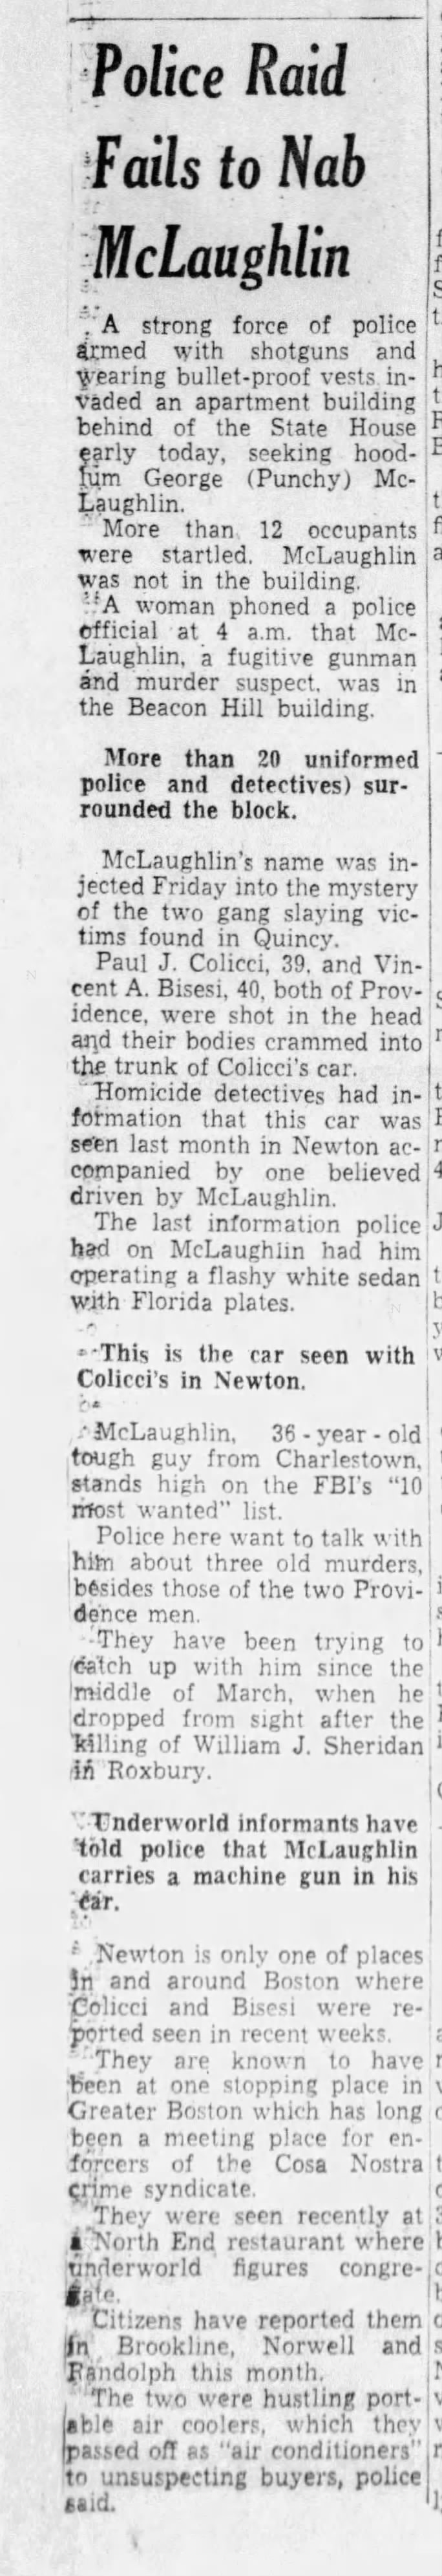 Police Raid Fails to Nab McLaughlin (25 July 1964)